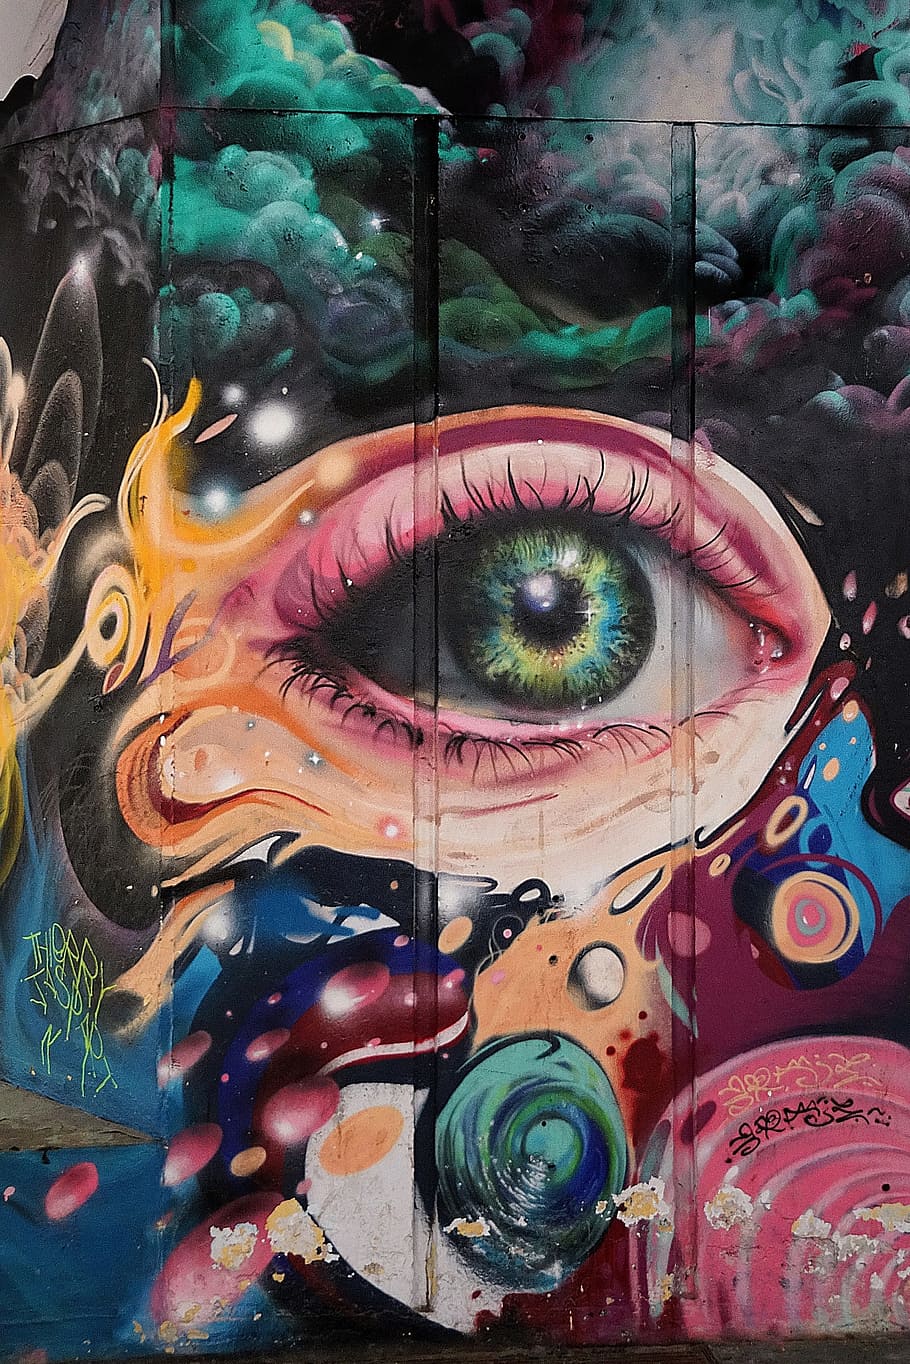 multicolored abstract painting, eye, graffiti, street, wall, art, fantasy, creativity, artistic, color